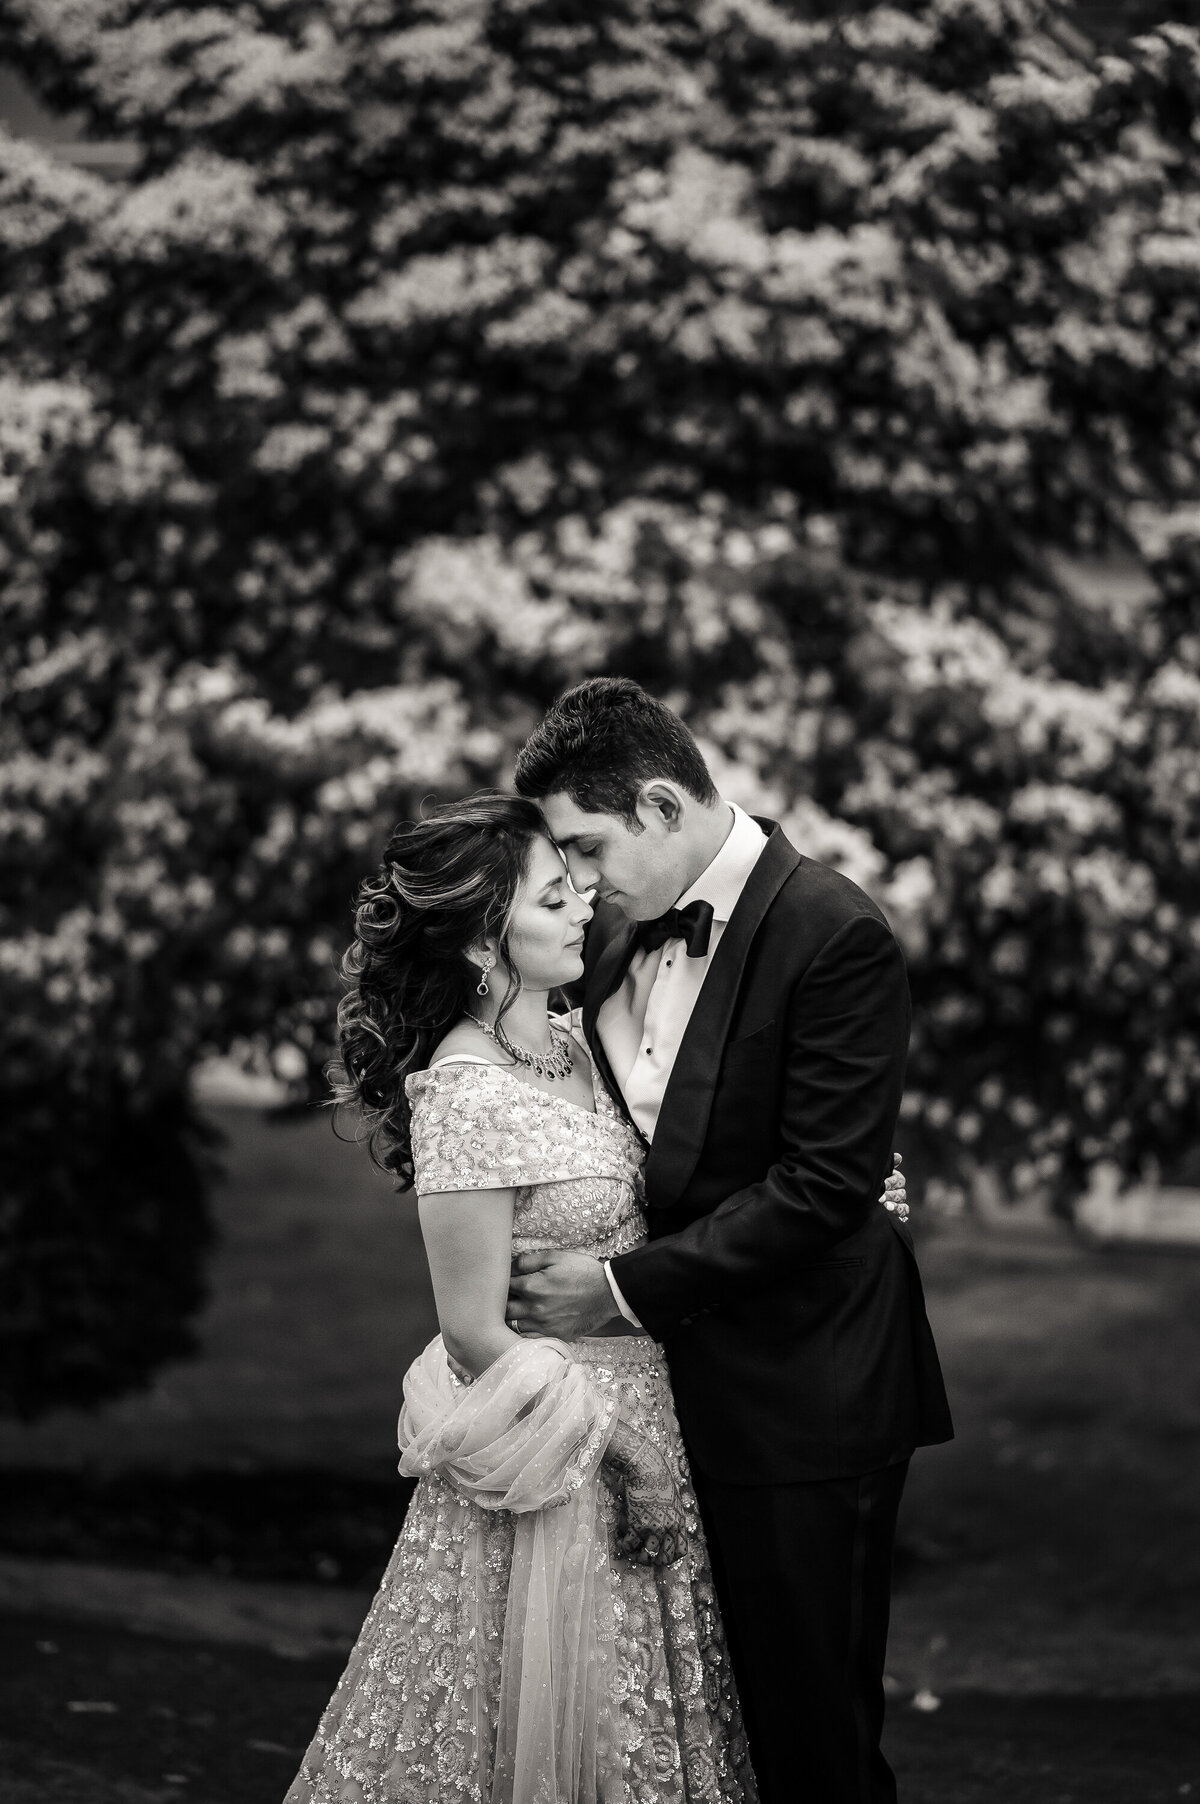 Let Ishan Fotografi capture your Willowwood Arboretum wedding in style.